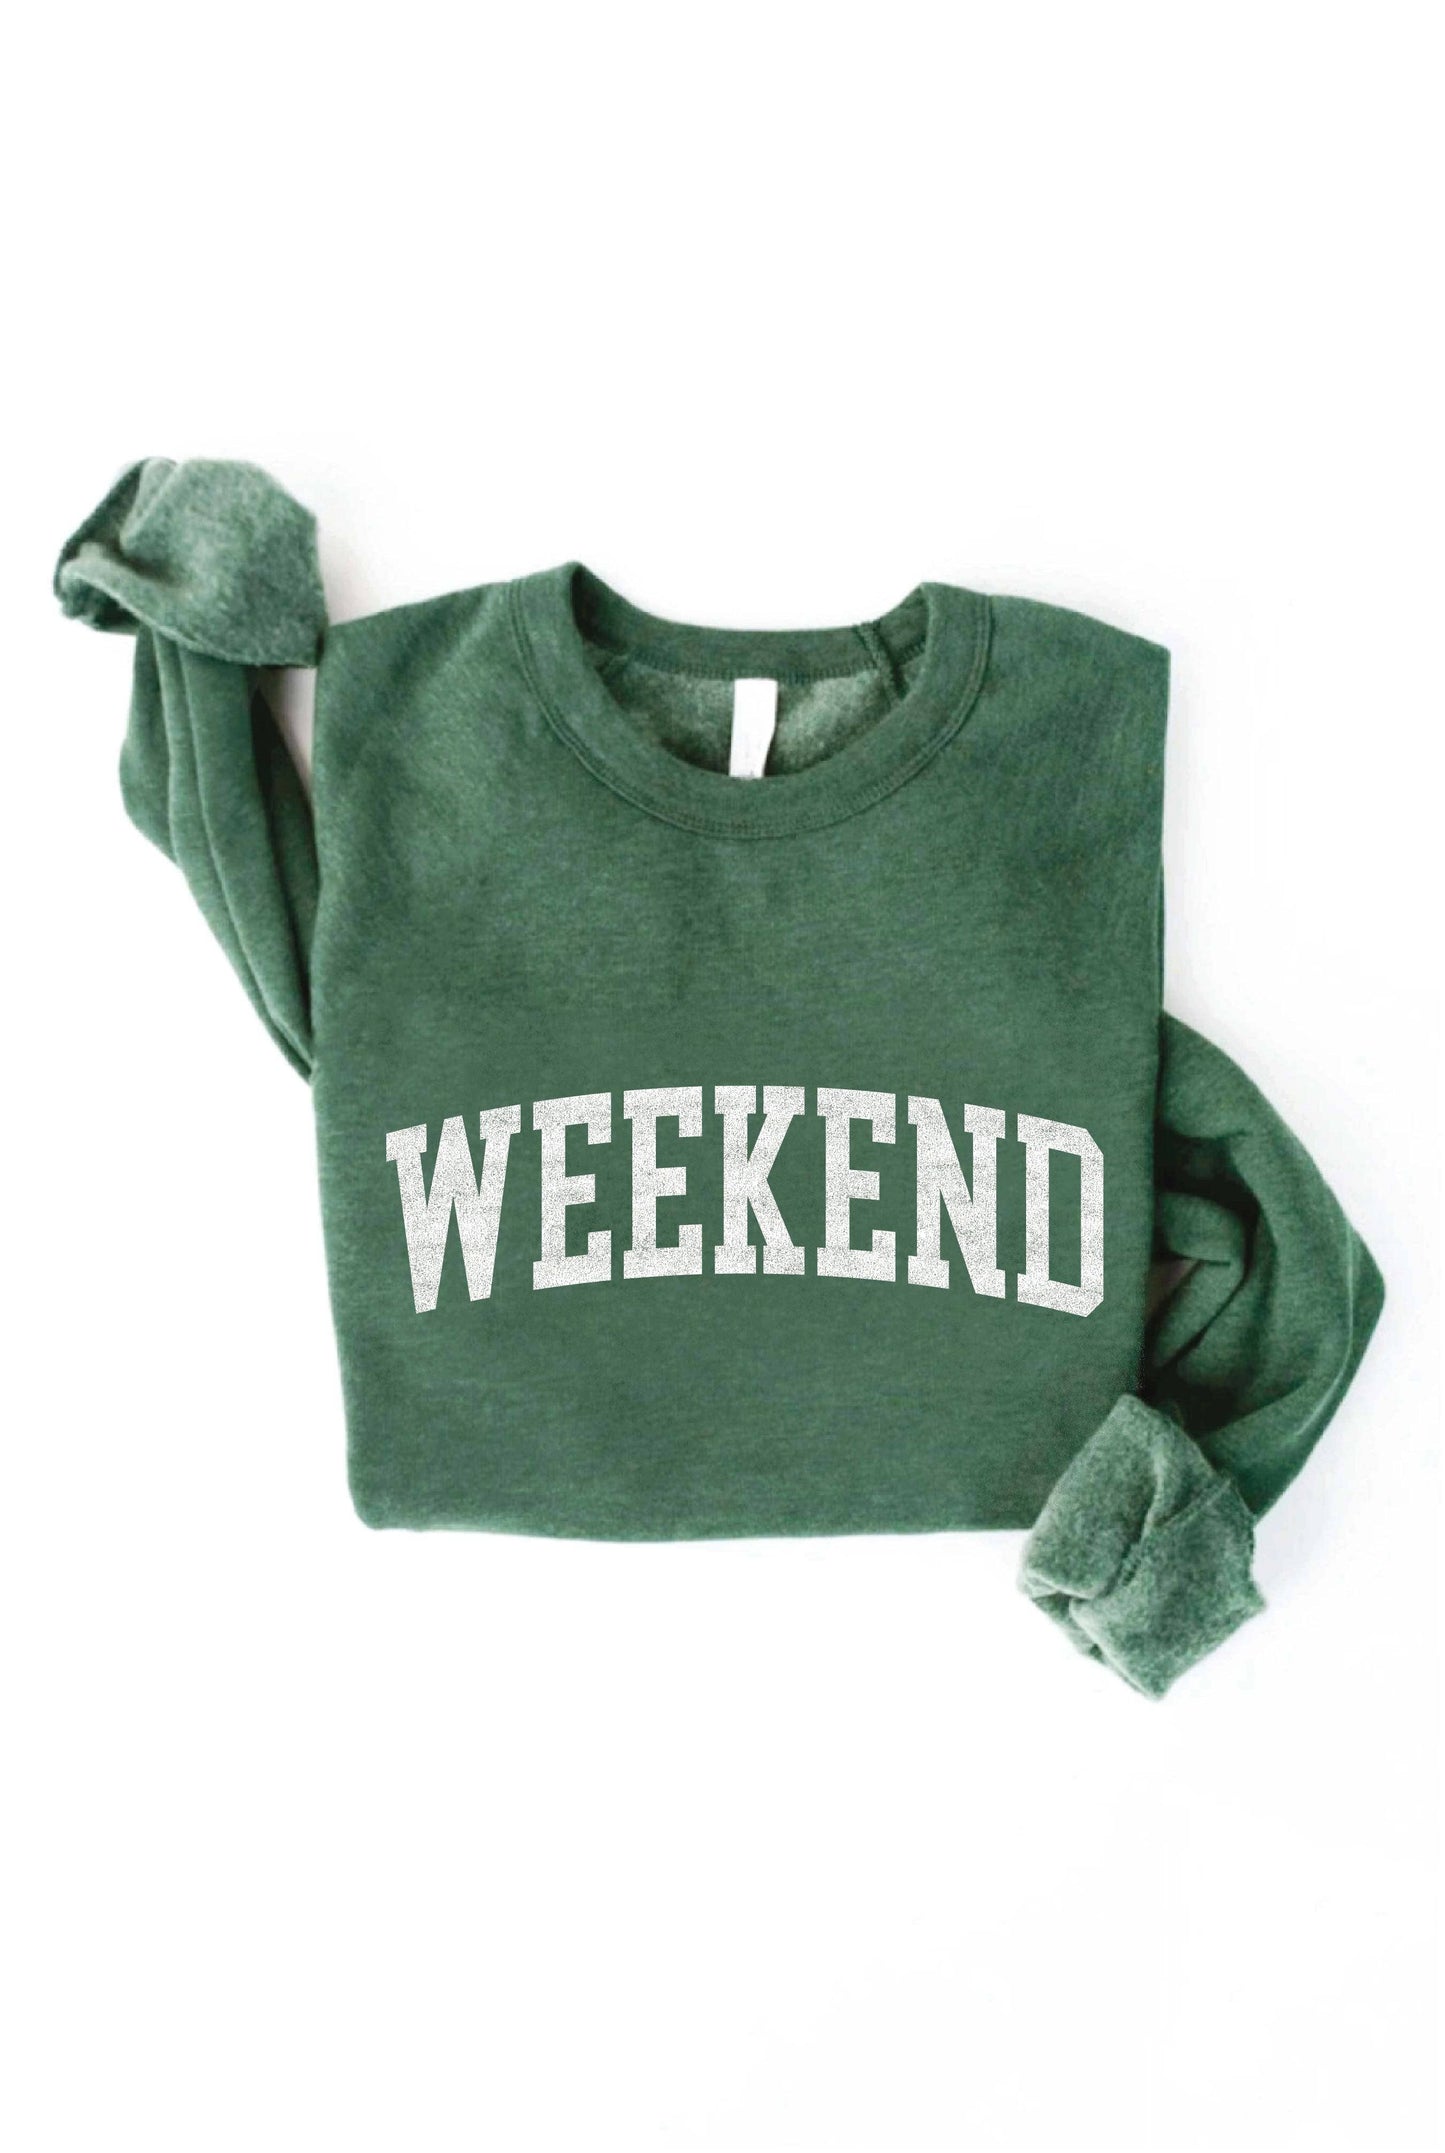 WEEKEND Graphic Sweatshirt…green…x-large